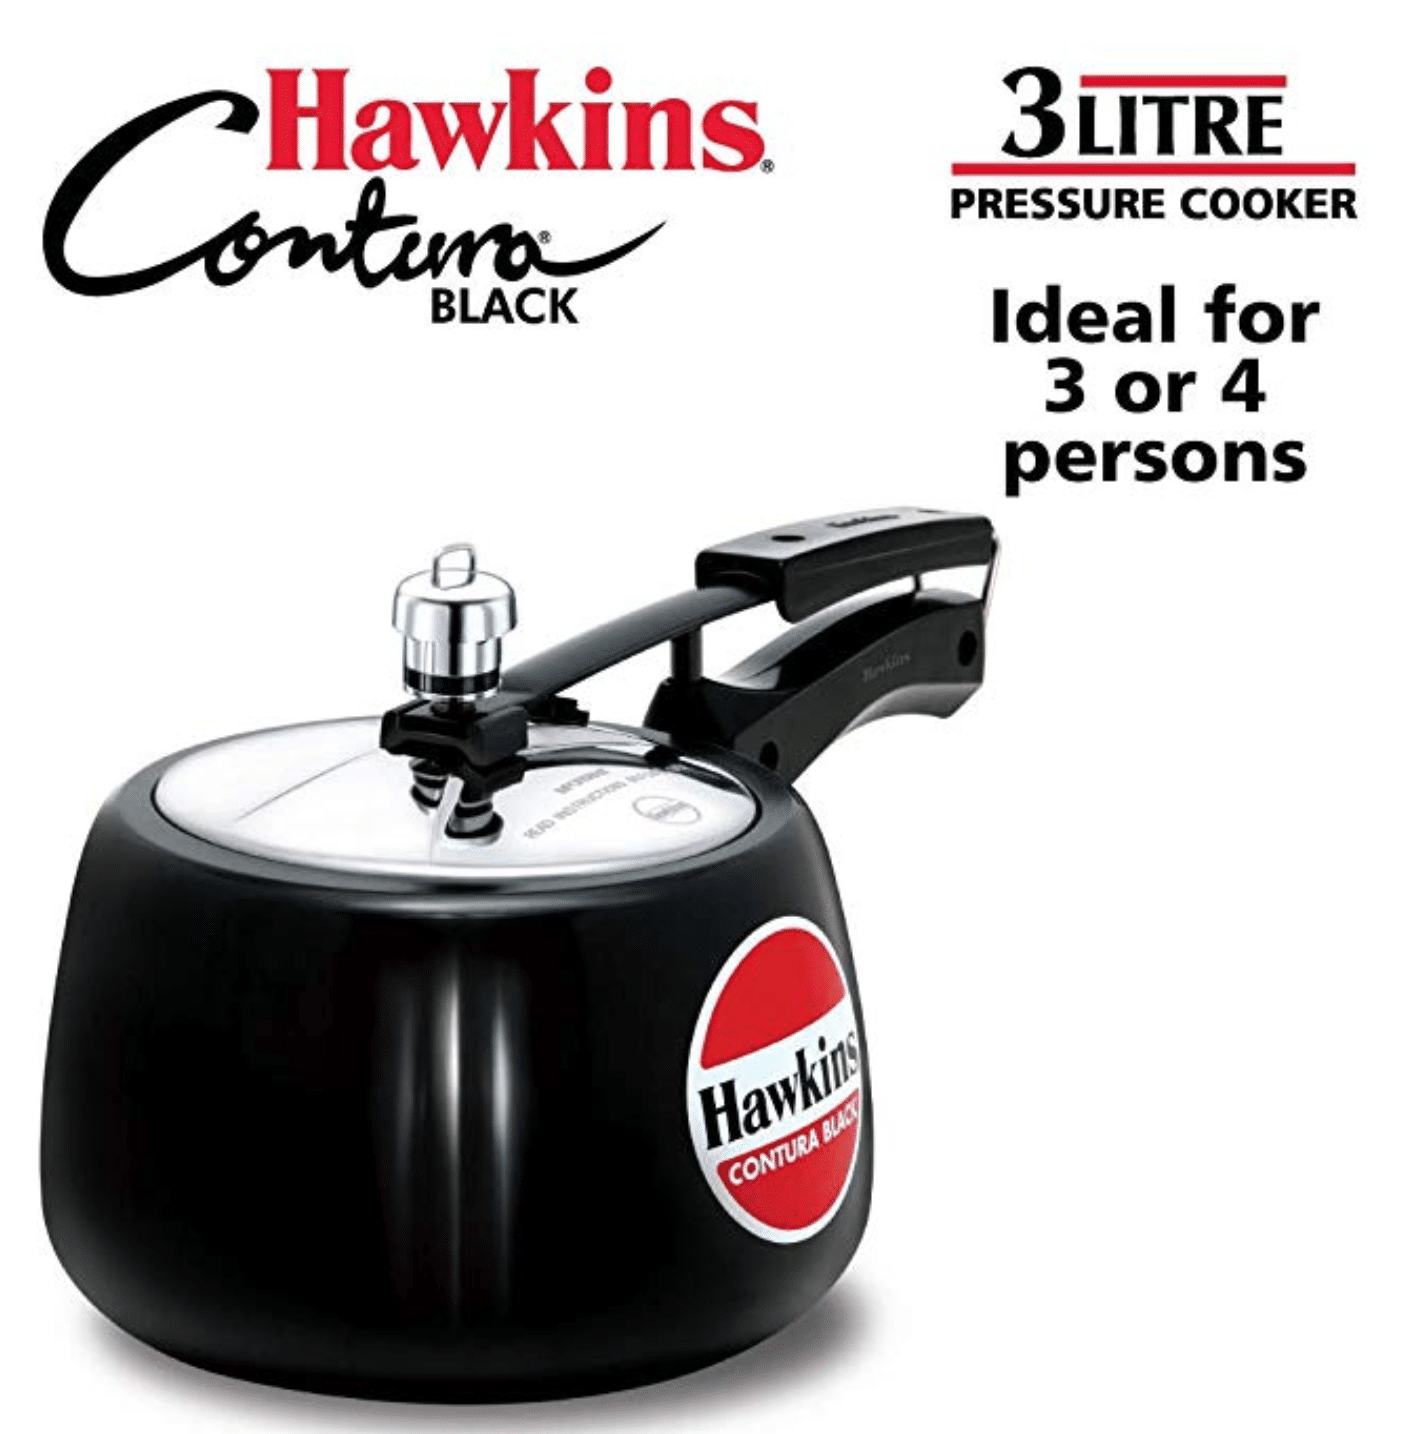 Hawkins Contura black pressure cooker